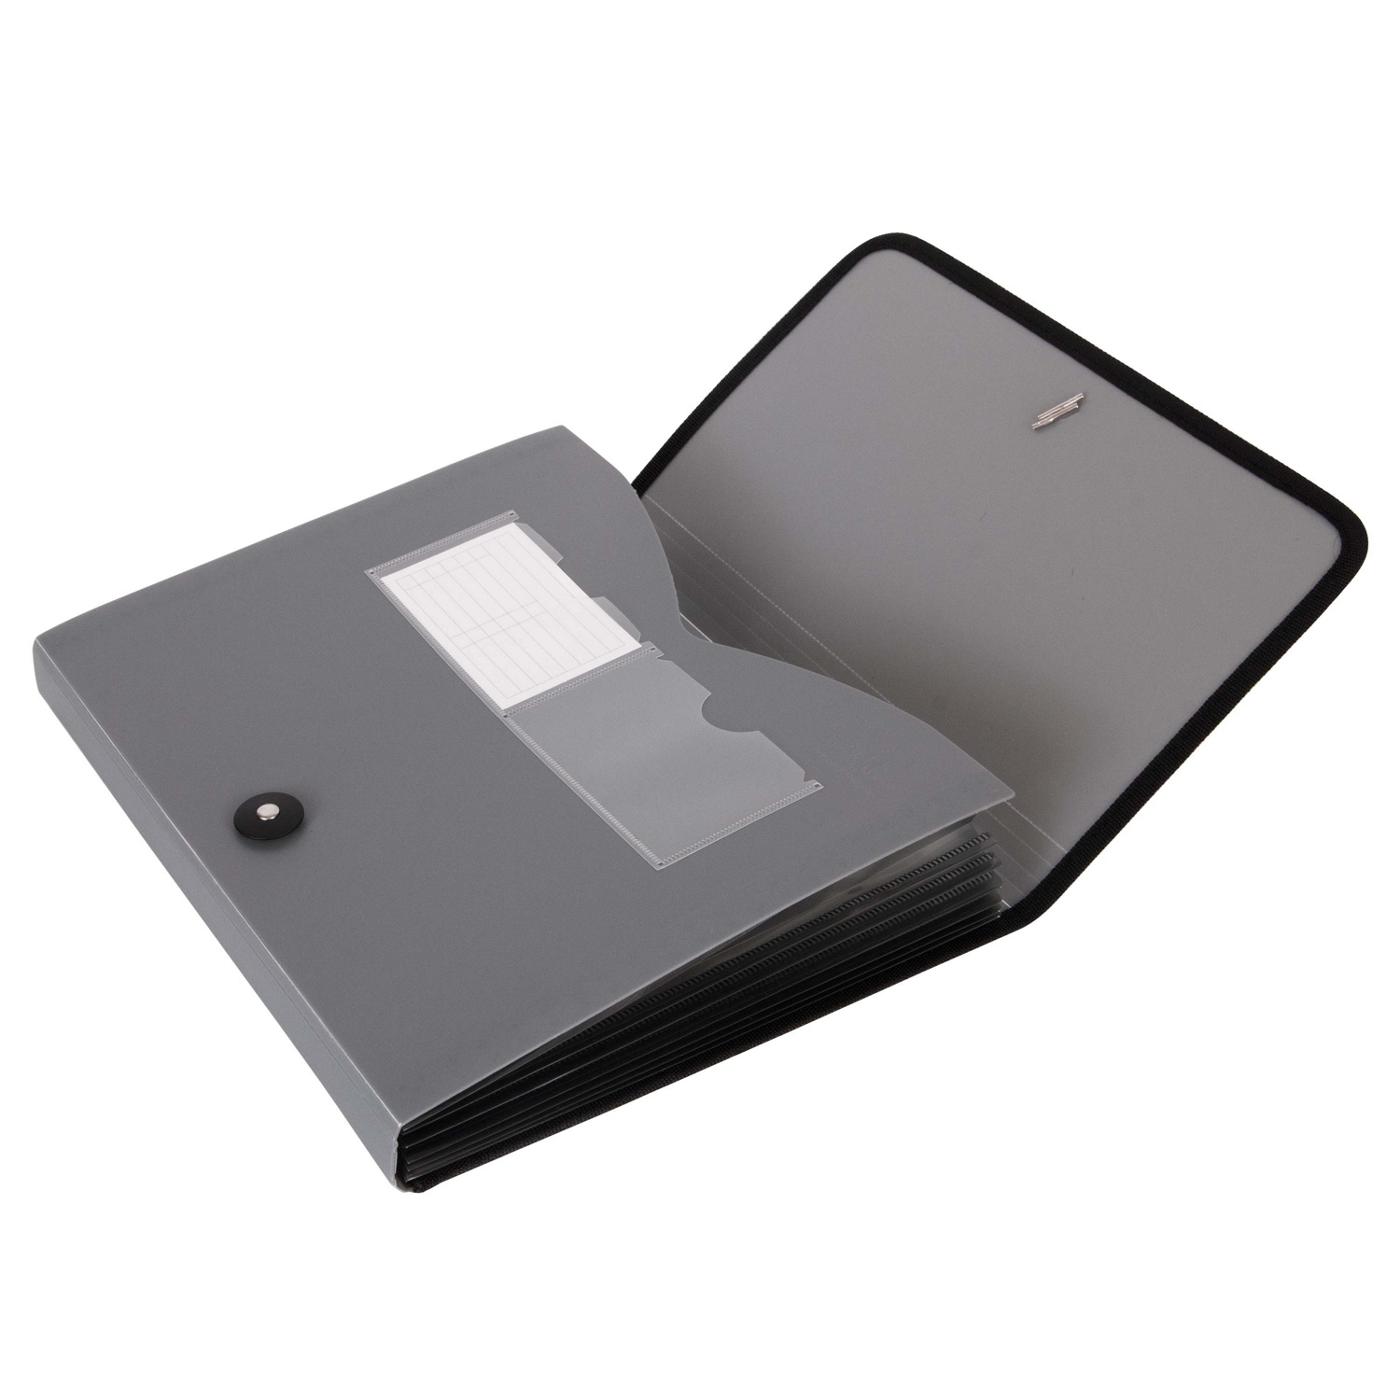 Doc It 7 Pocket Expanding File Folder - Gray; image 3 of 5